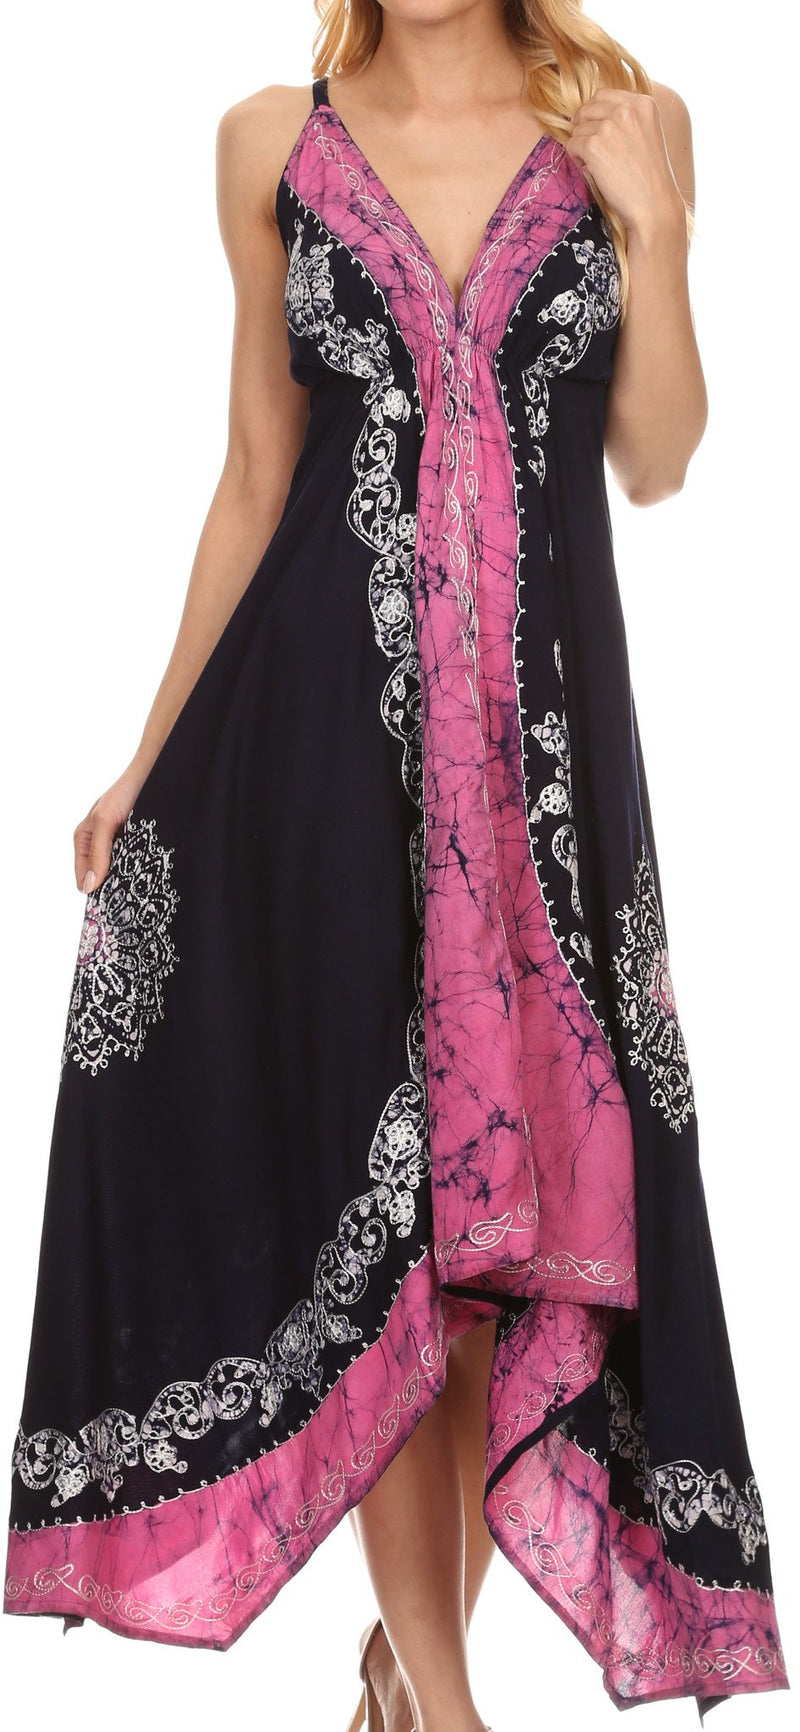 Sakkas Serenity Embroidered Batik Halter Dress